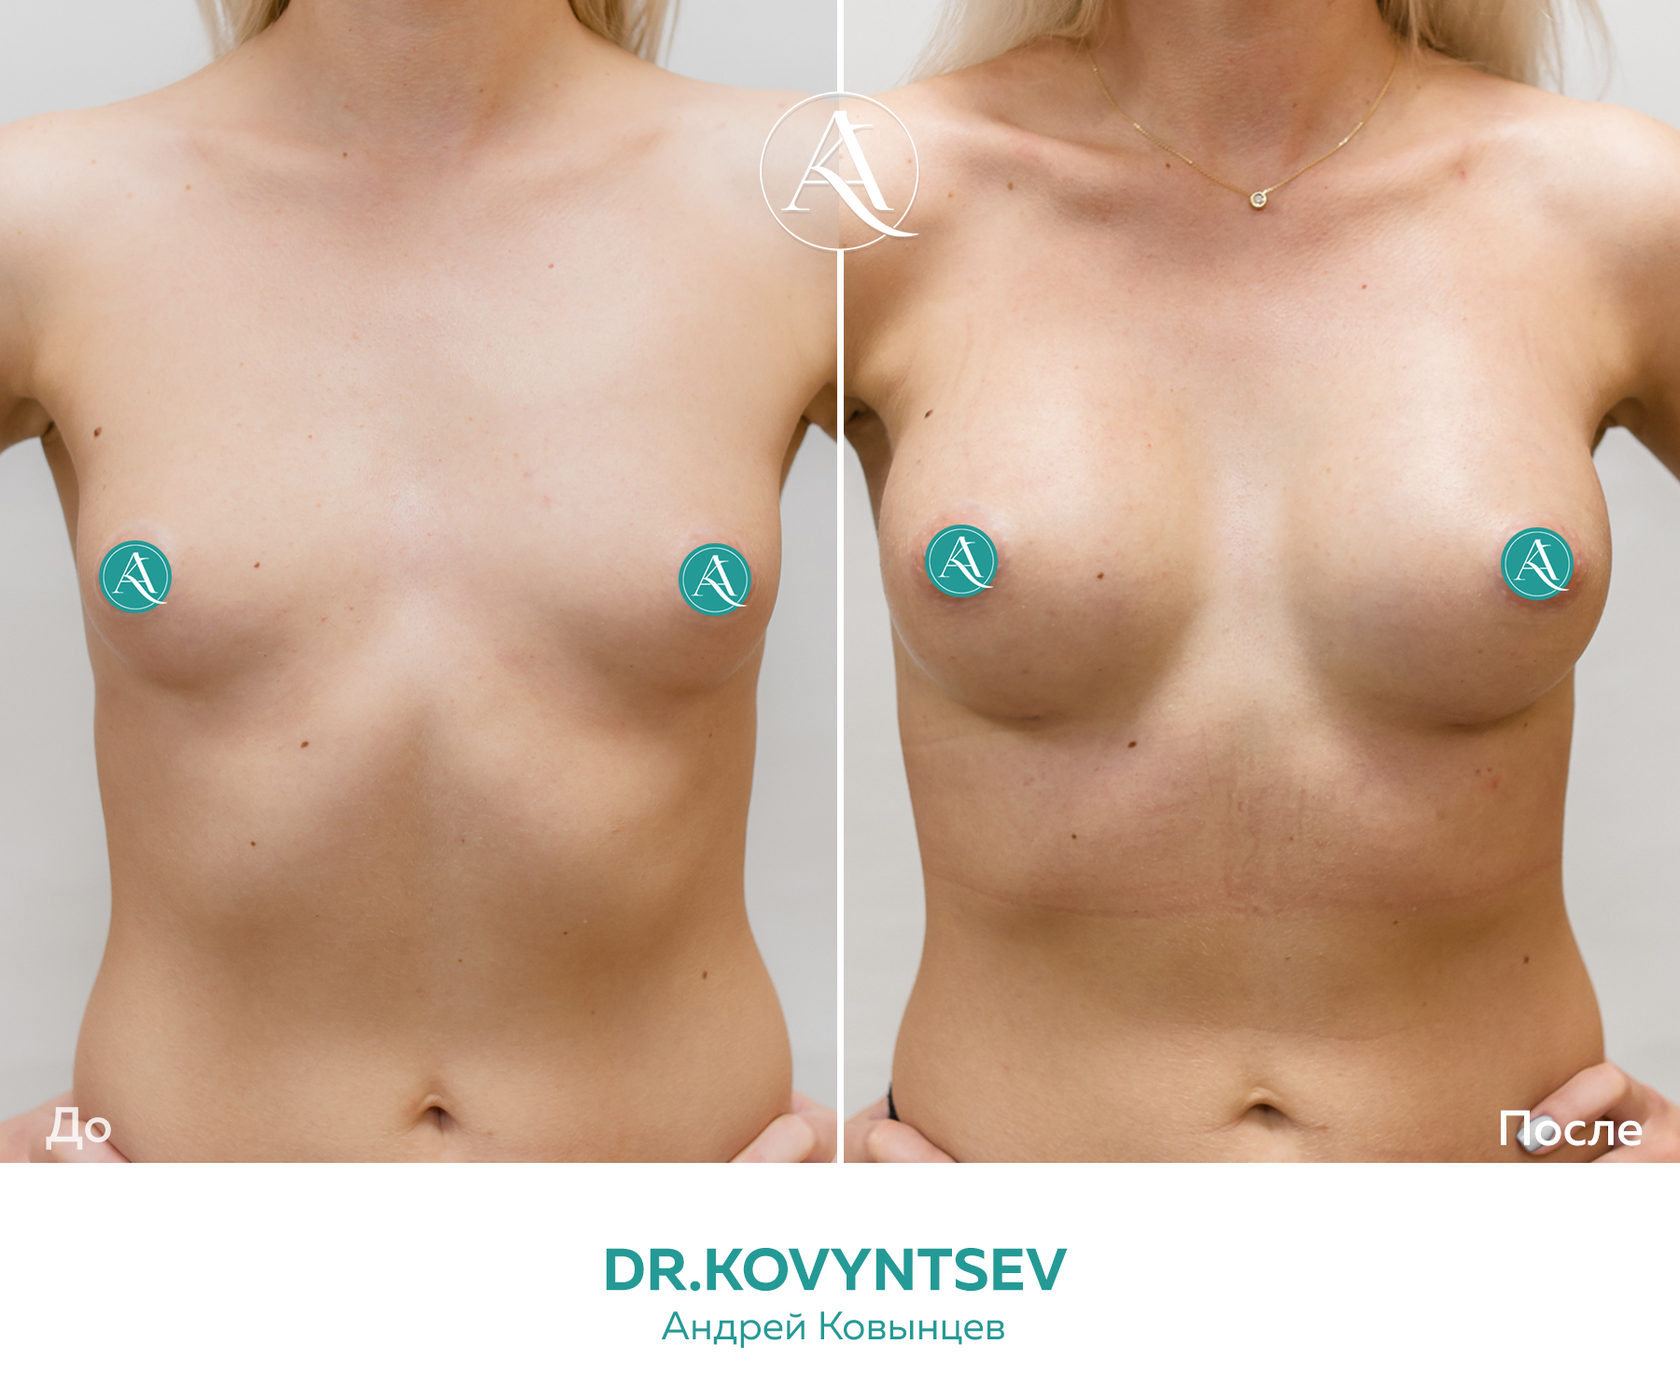 асимметрия груди у мужчин фото 51